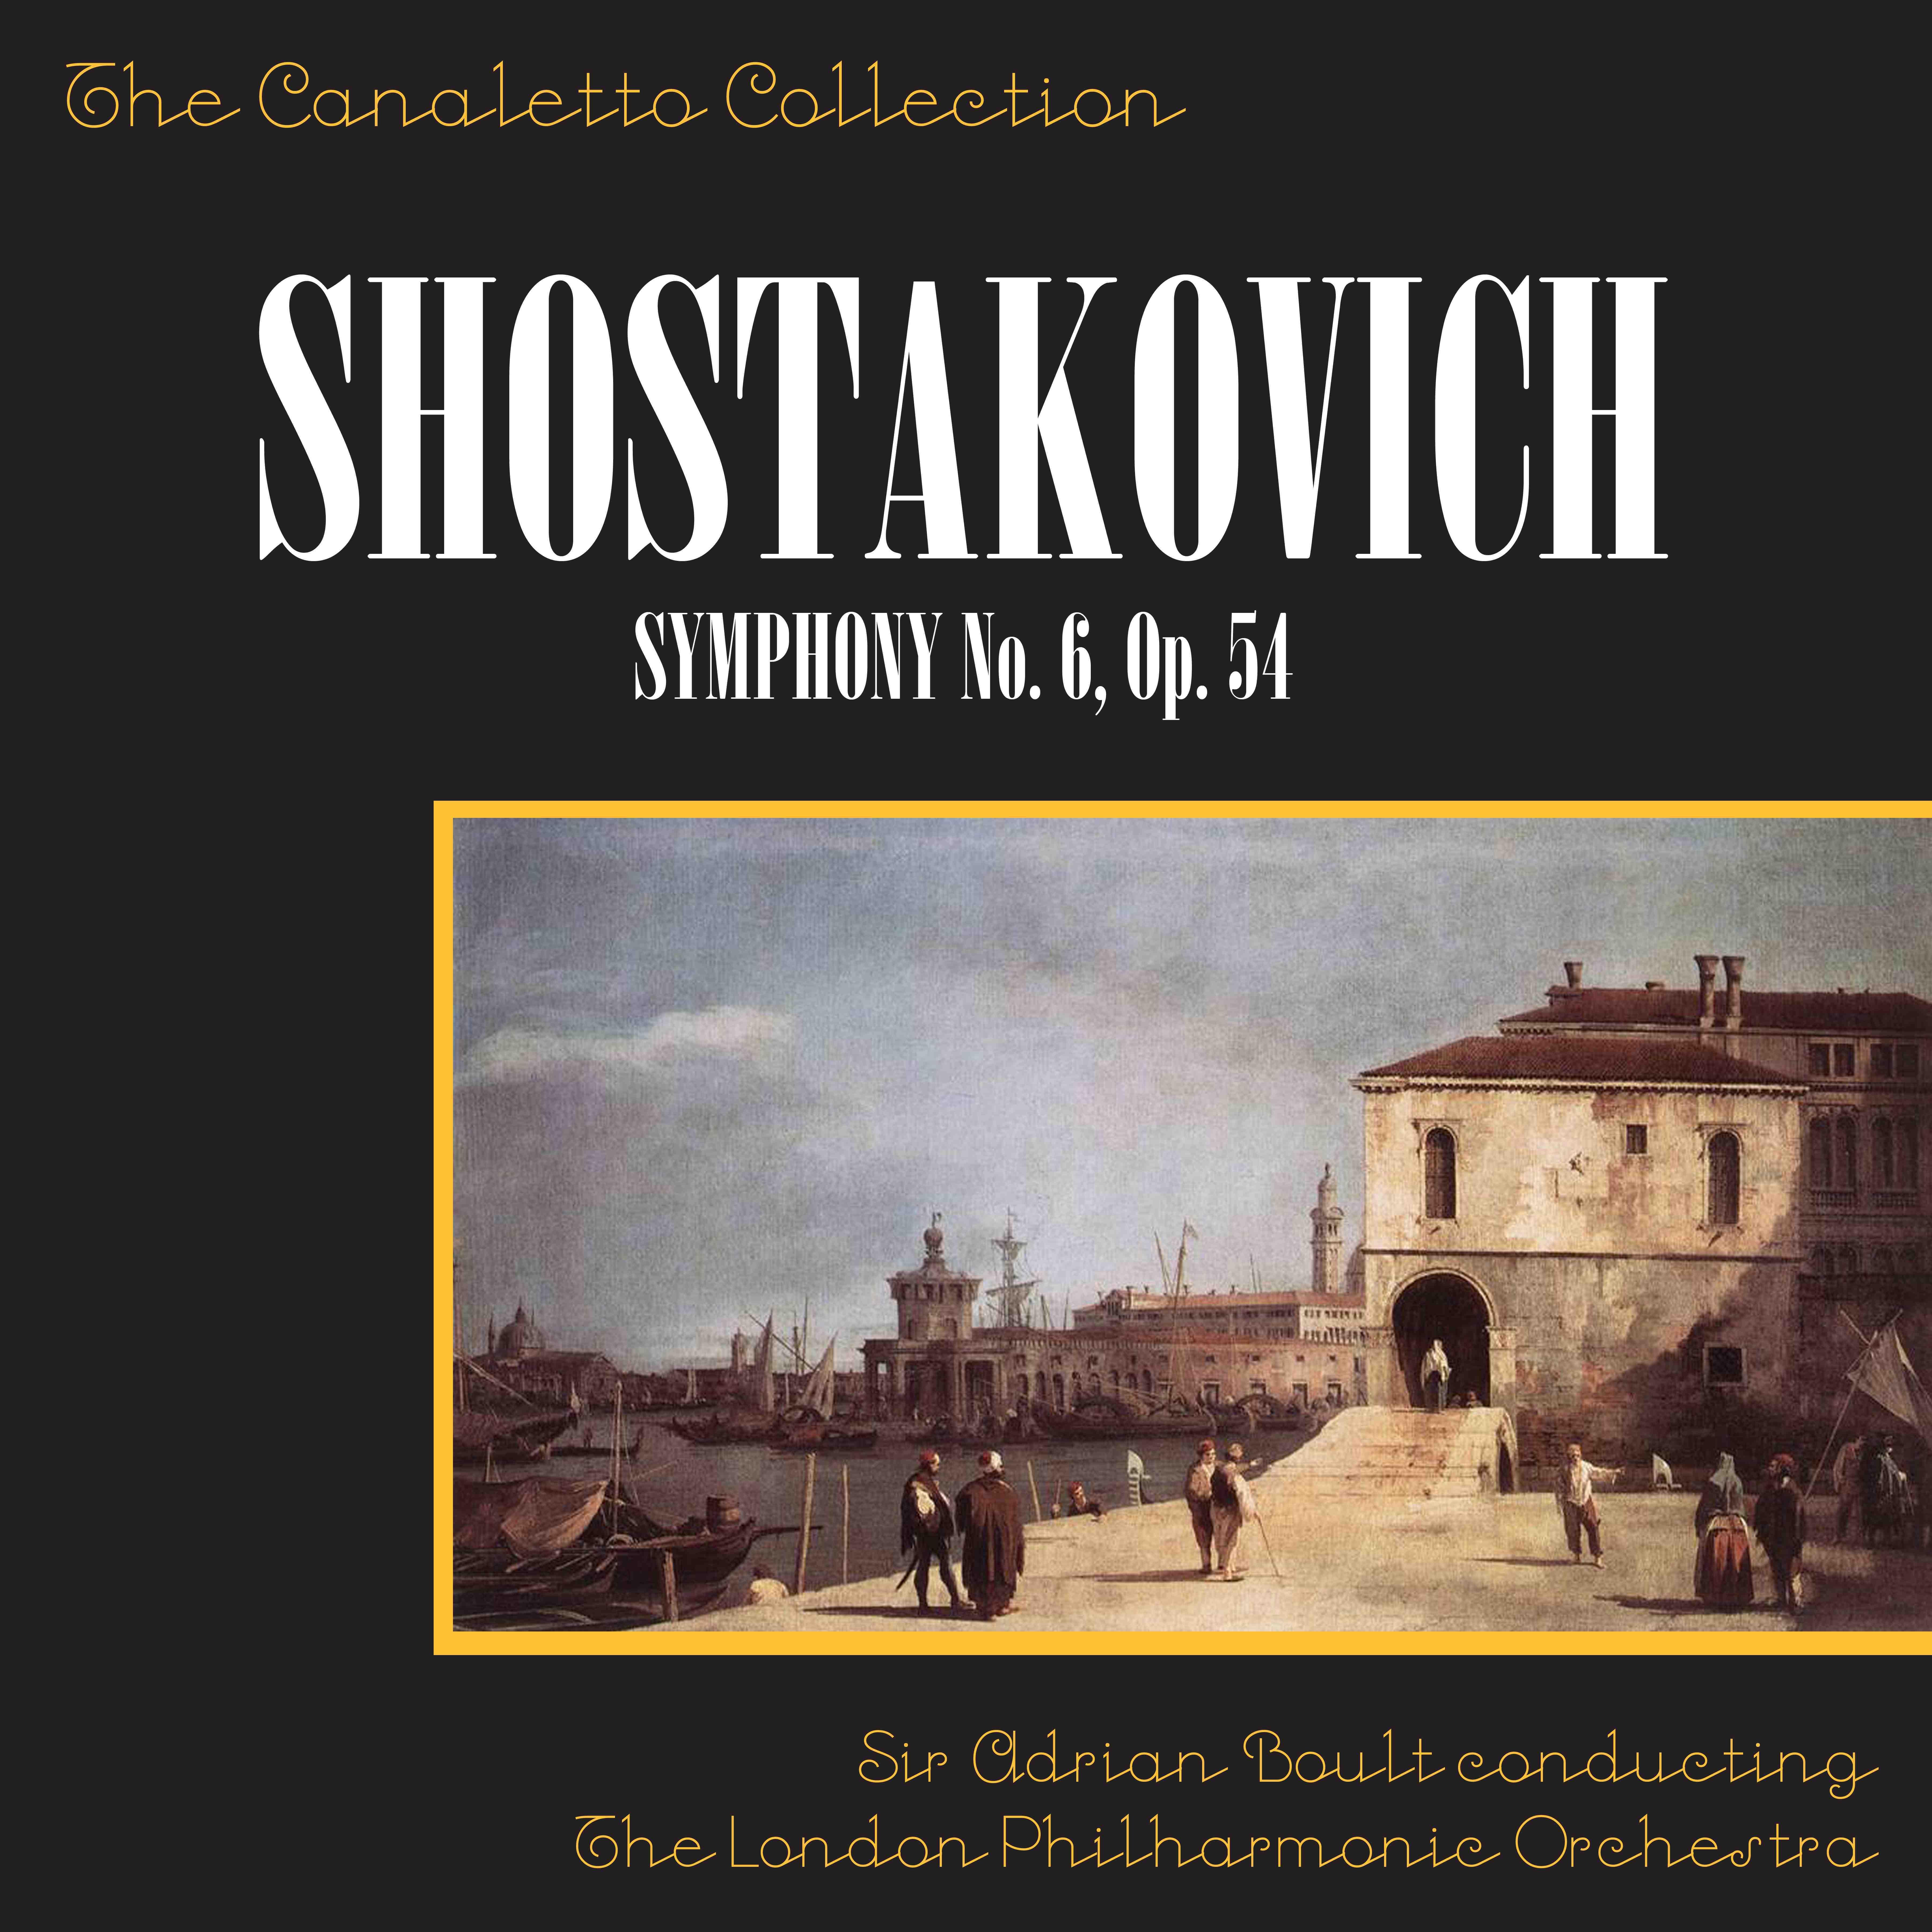 Shostakovich: Symphony No. 6, Op. 54: 3rd Movement - Presto